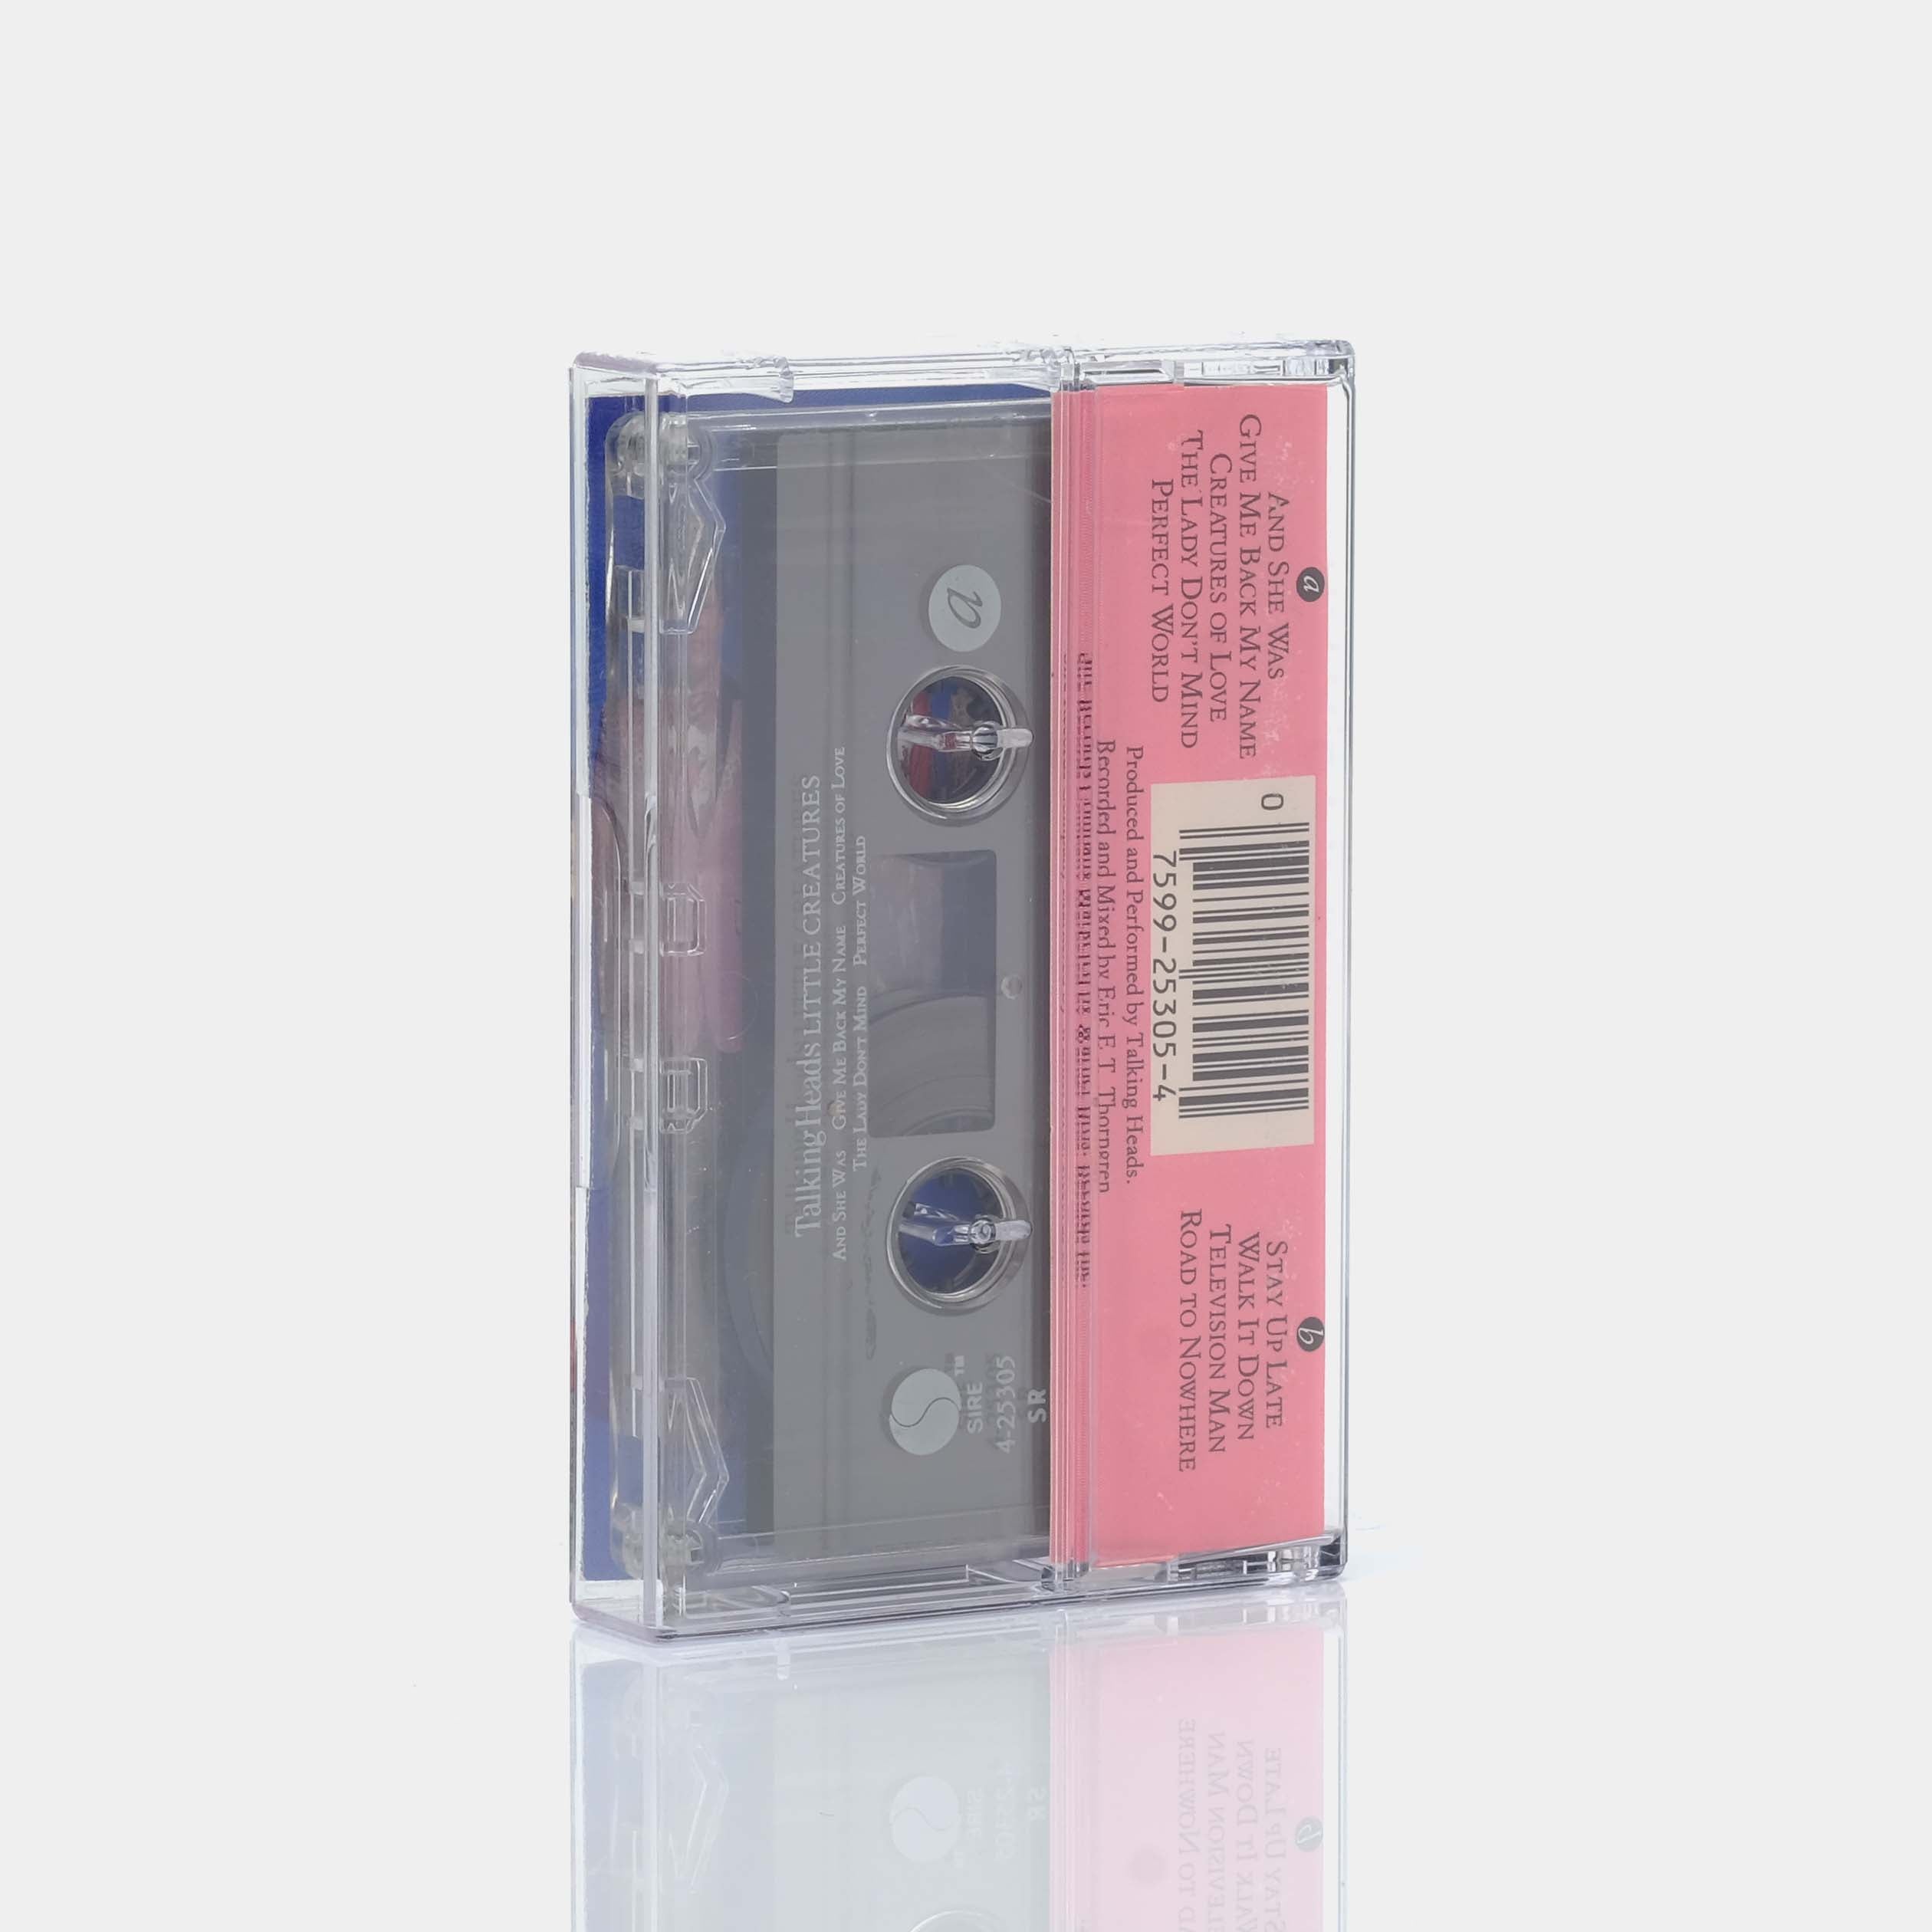 Talking Heads - Little Creatures Cassette Tape